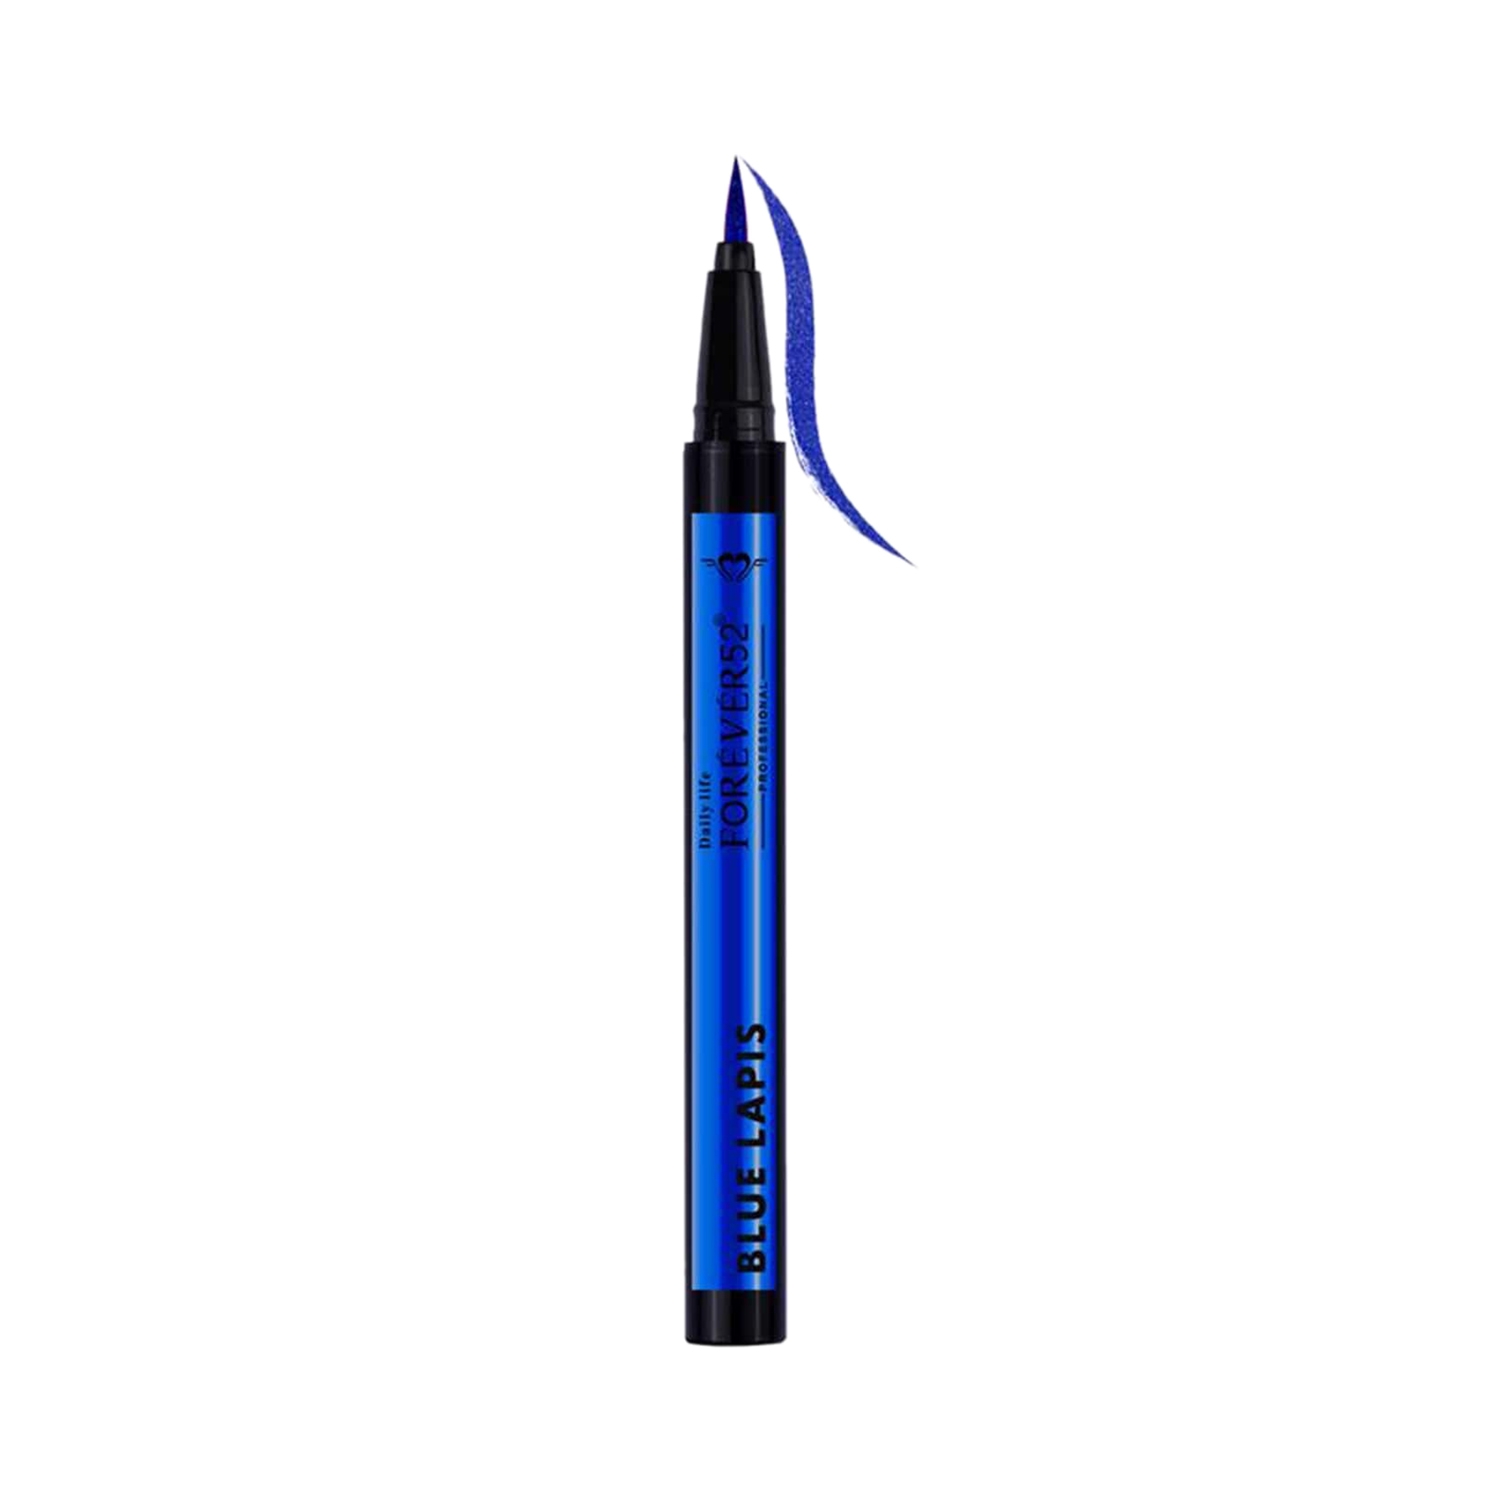 Daily Life Forever52 | Daily Life Forever52 Glitz Waterproof Eyeliner Eyeshadow - Blue Lapis (0.6g)